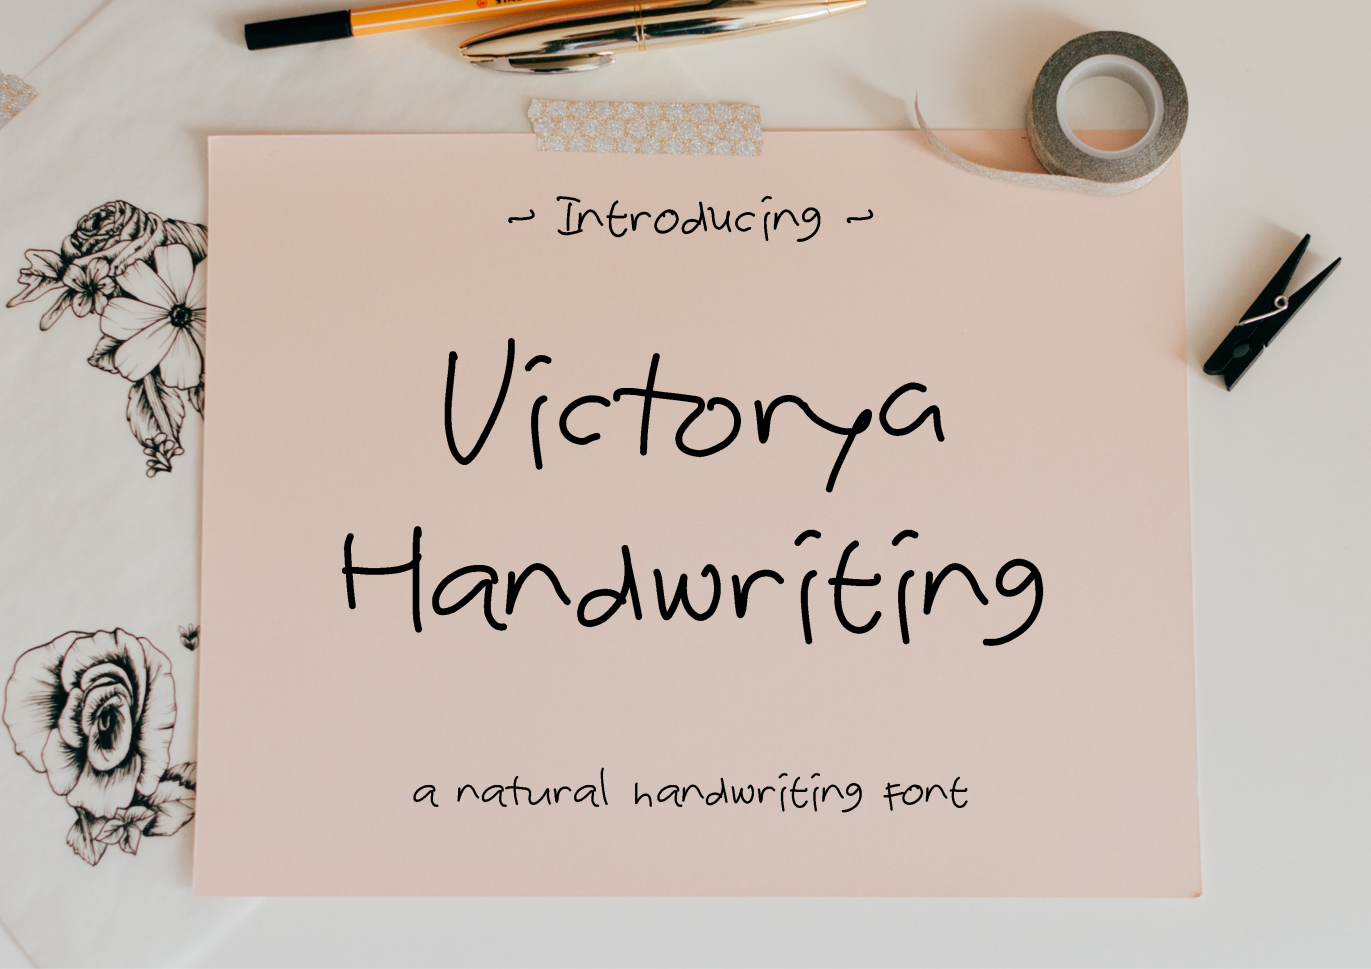 Victorya Handwriting font